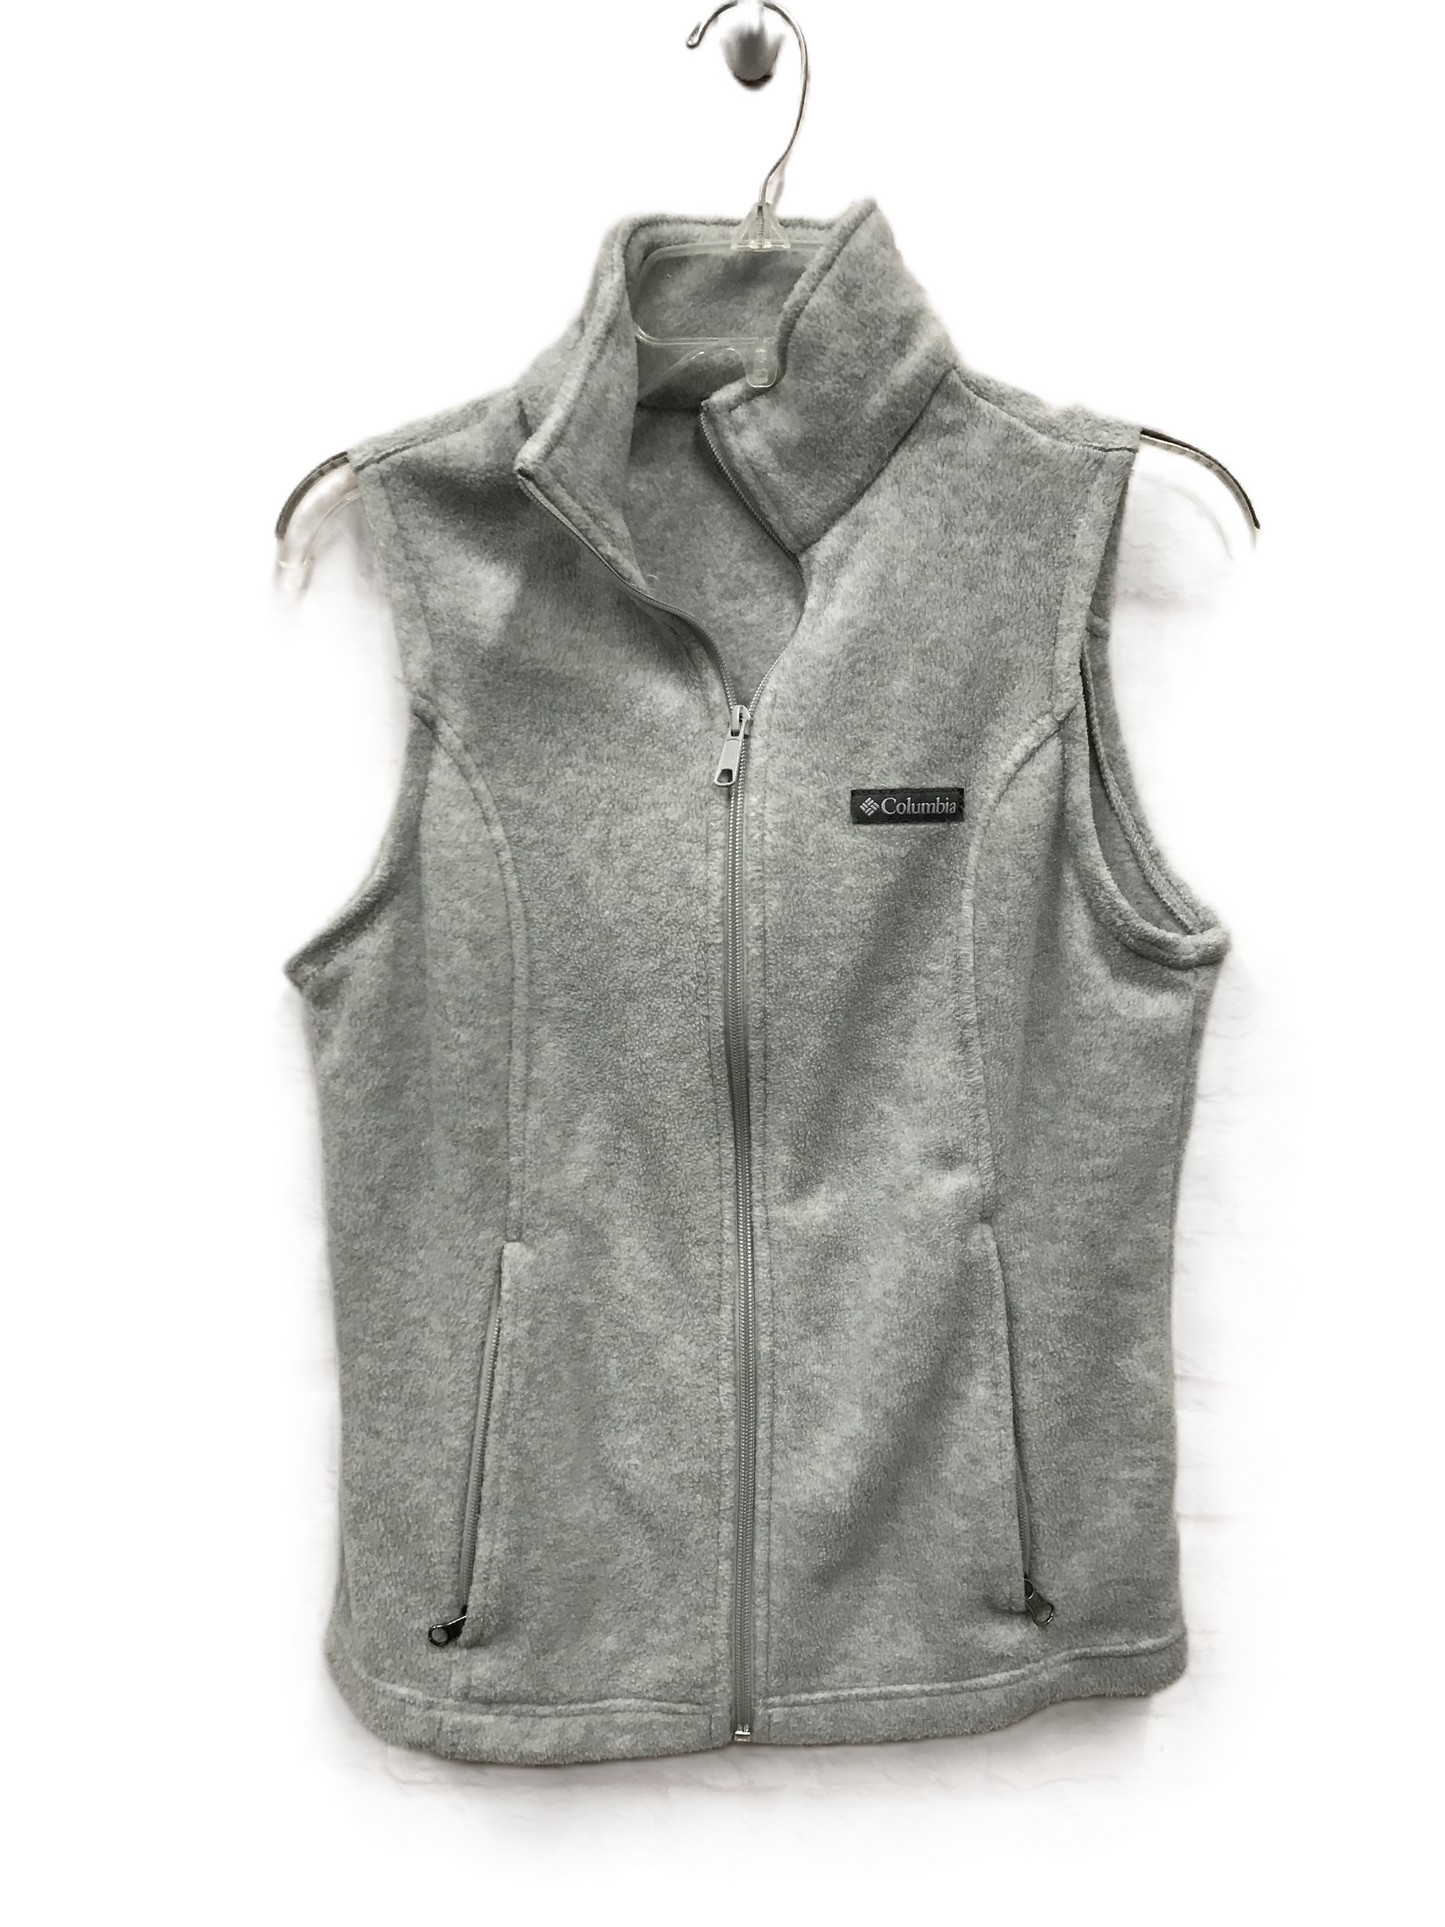 Grey Vest Fleece By Columbia, Size: S